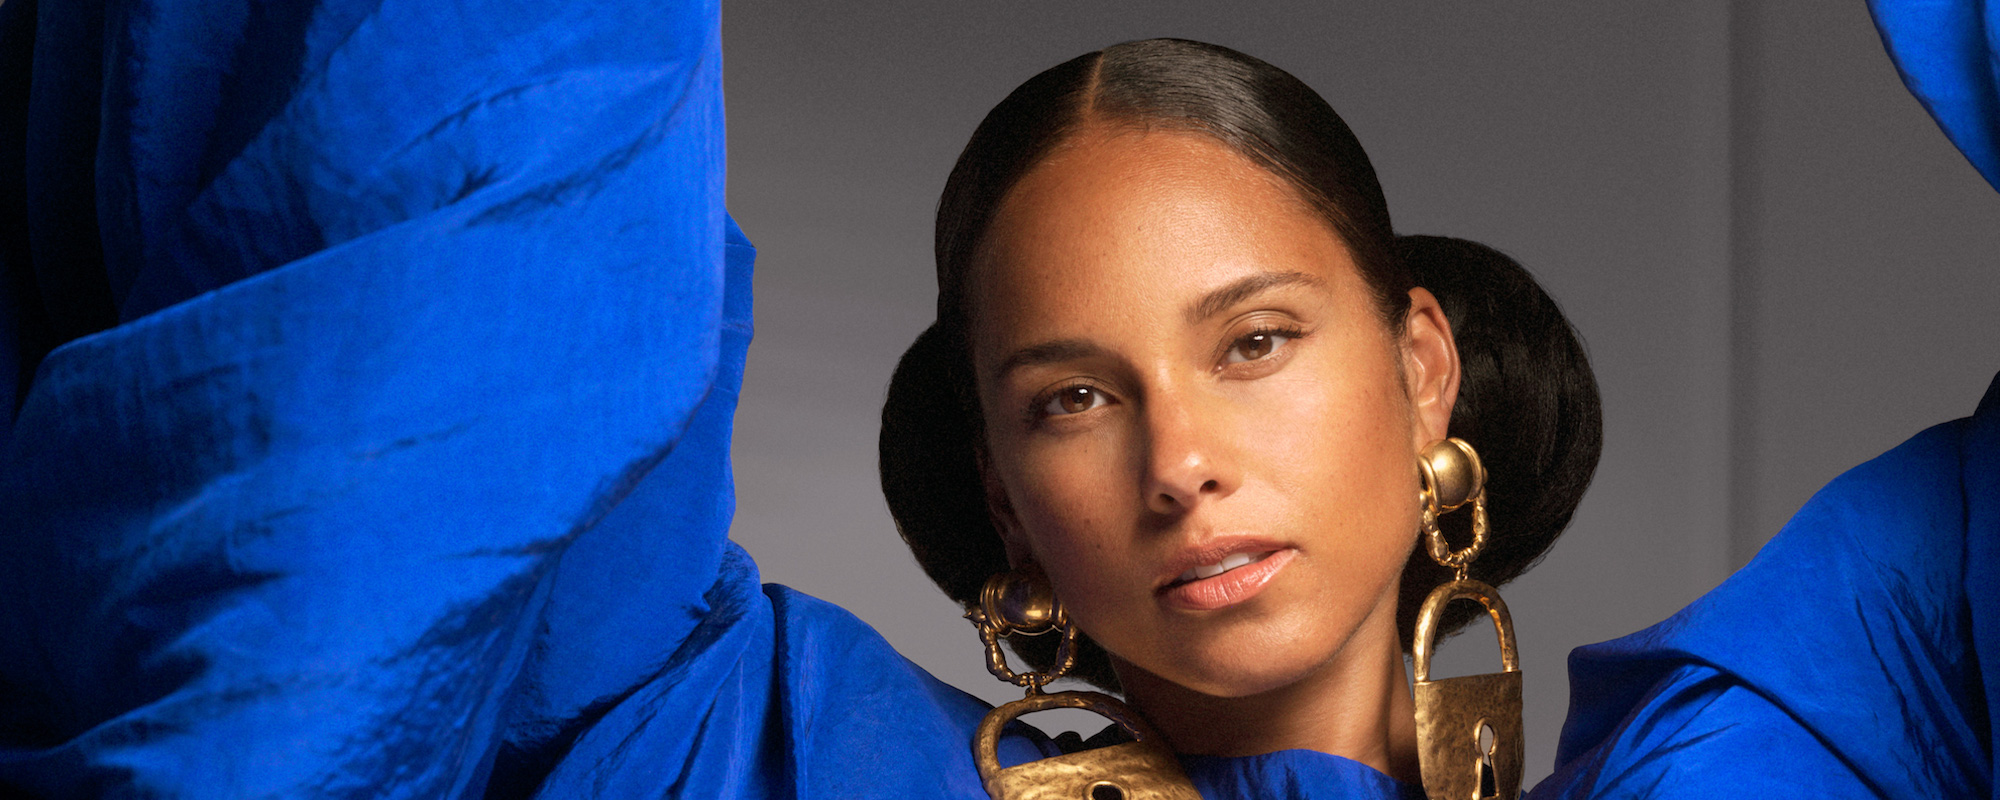 Alicia Keys offre une performance effrayante de "If I Ain't Got You" avec All-Women Orchestra